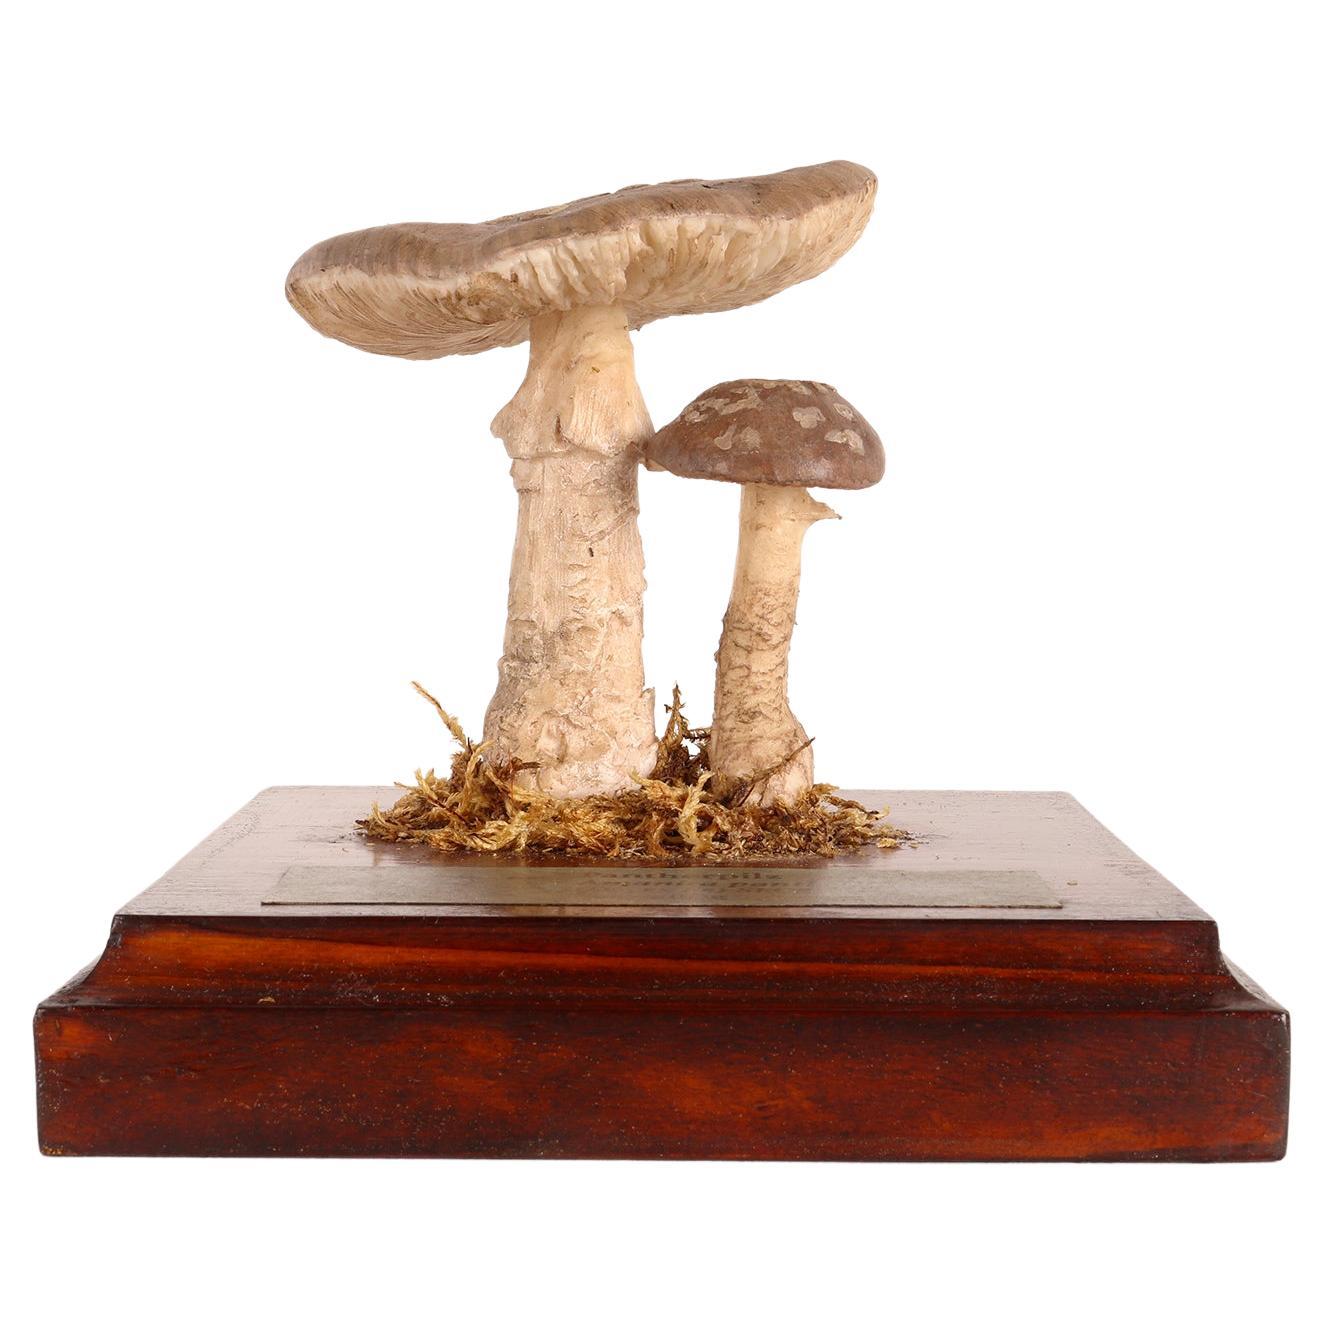 Mushroom Model, Germany 1950